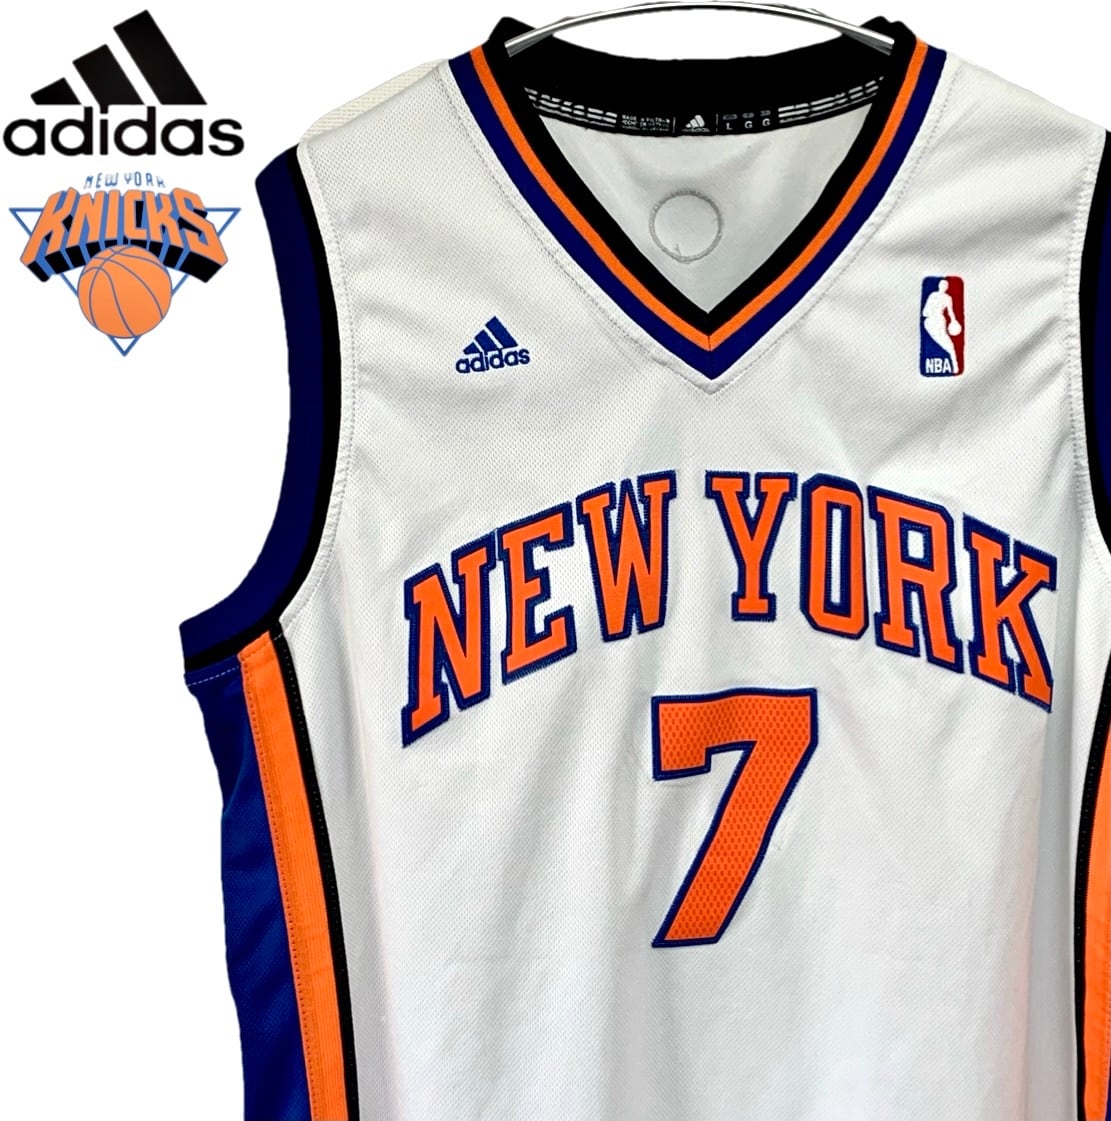 NBA NewYork Knicks カーメロ・アンソニーユニフォーム | zoomies ...